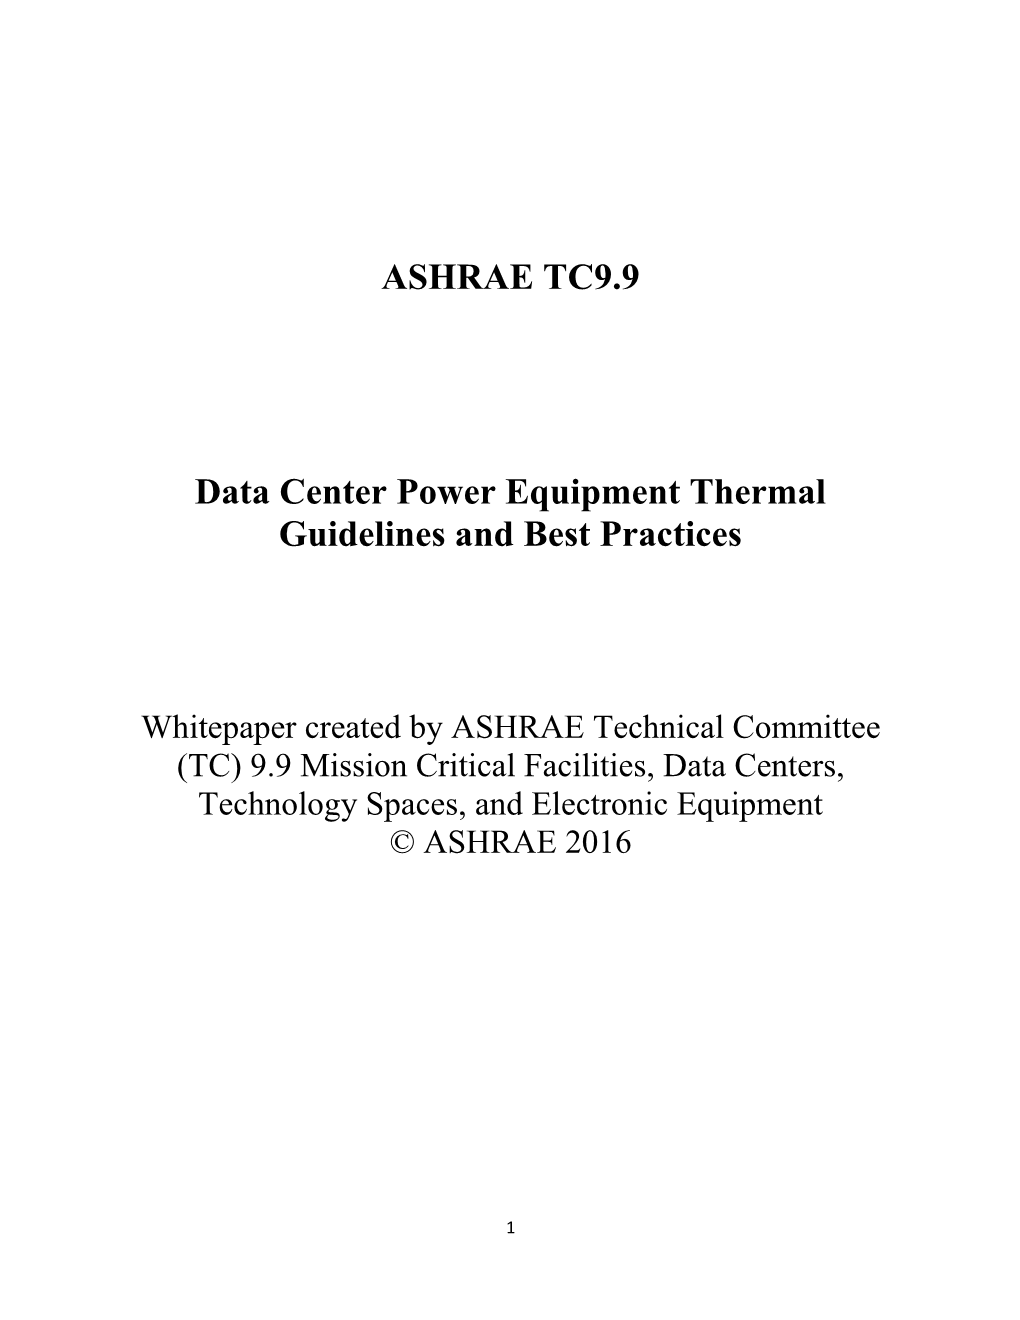 ASHRAE TC9.9 Data Center Power Equipment Thermal Guidelines